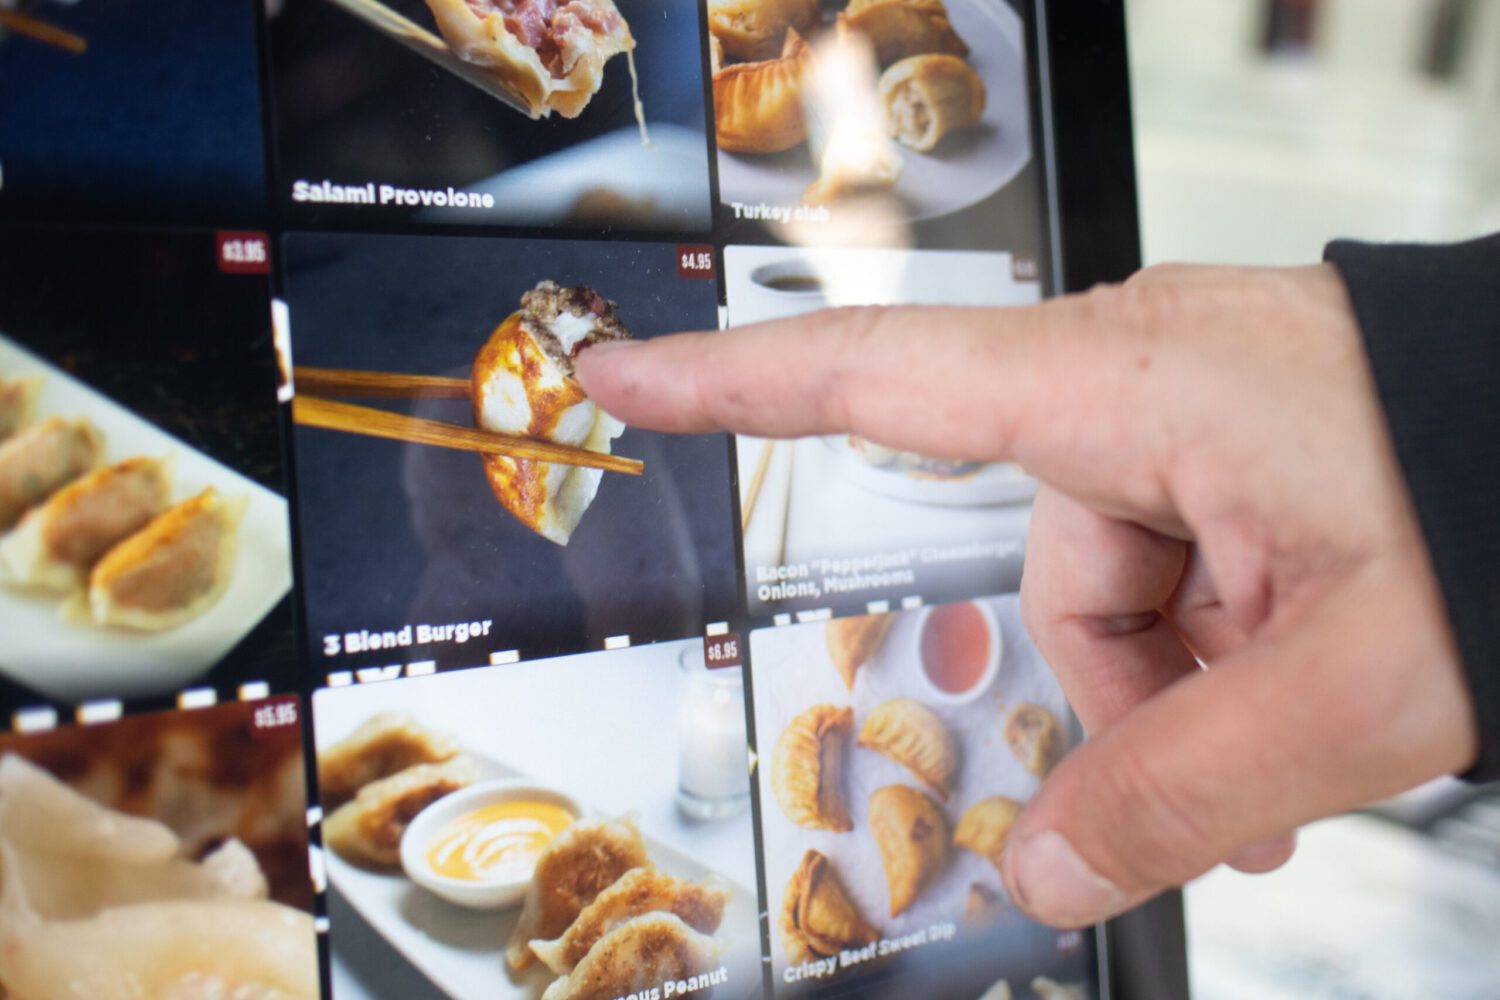 Atlanta Is Getting Its First 24-Hour Automat Dispensing Dumplings